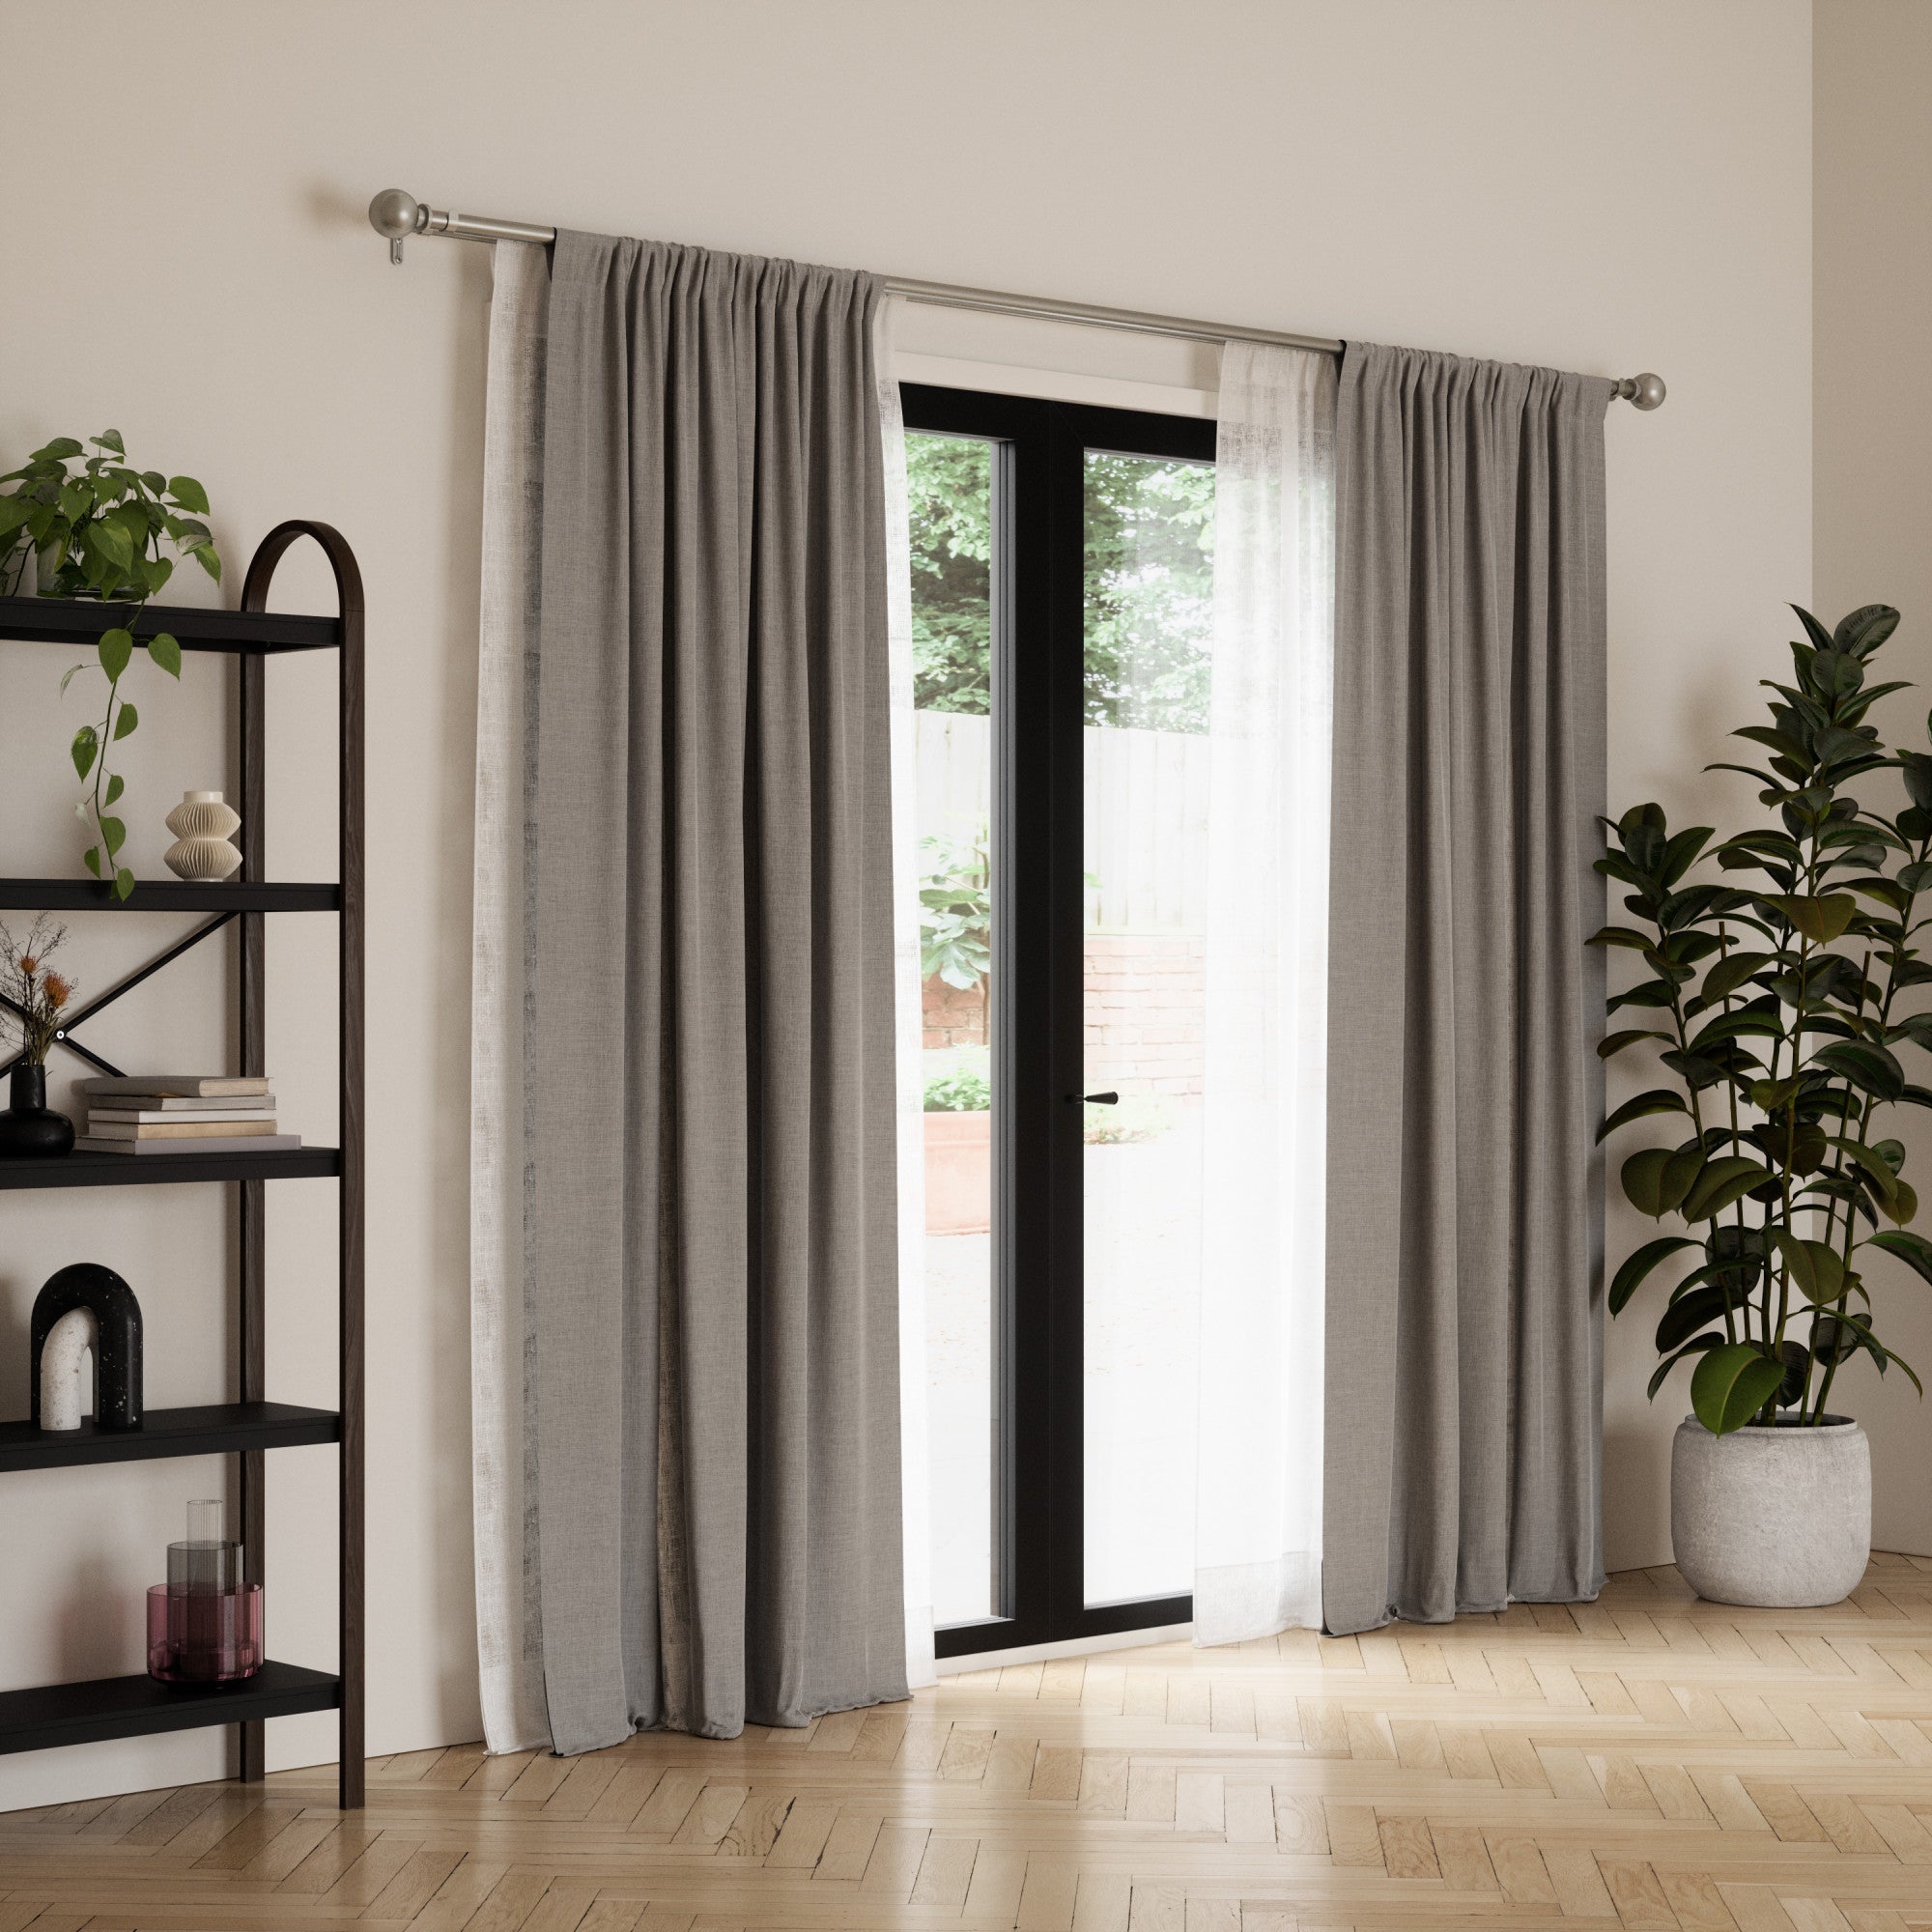 Double Curtain Rods | color: Eco-Friendly Nickel | size: 72-144"""" (183-366 cm) | diameter: 1 & 3/4"""" (4.44 cm)